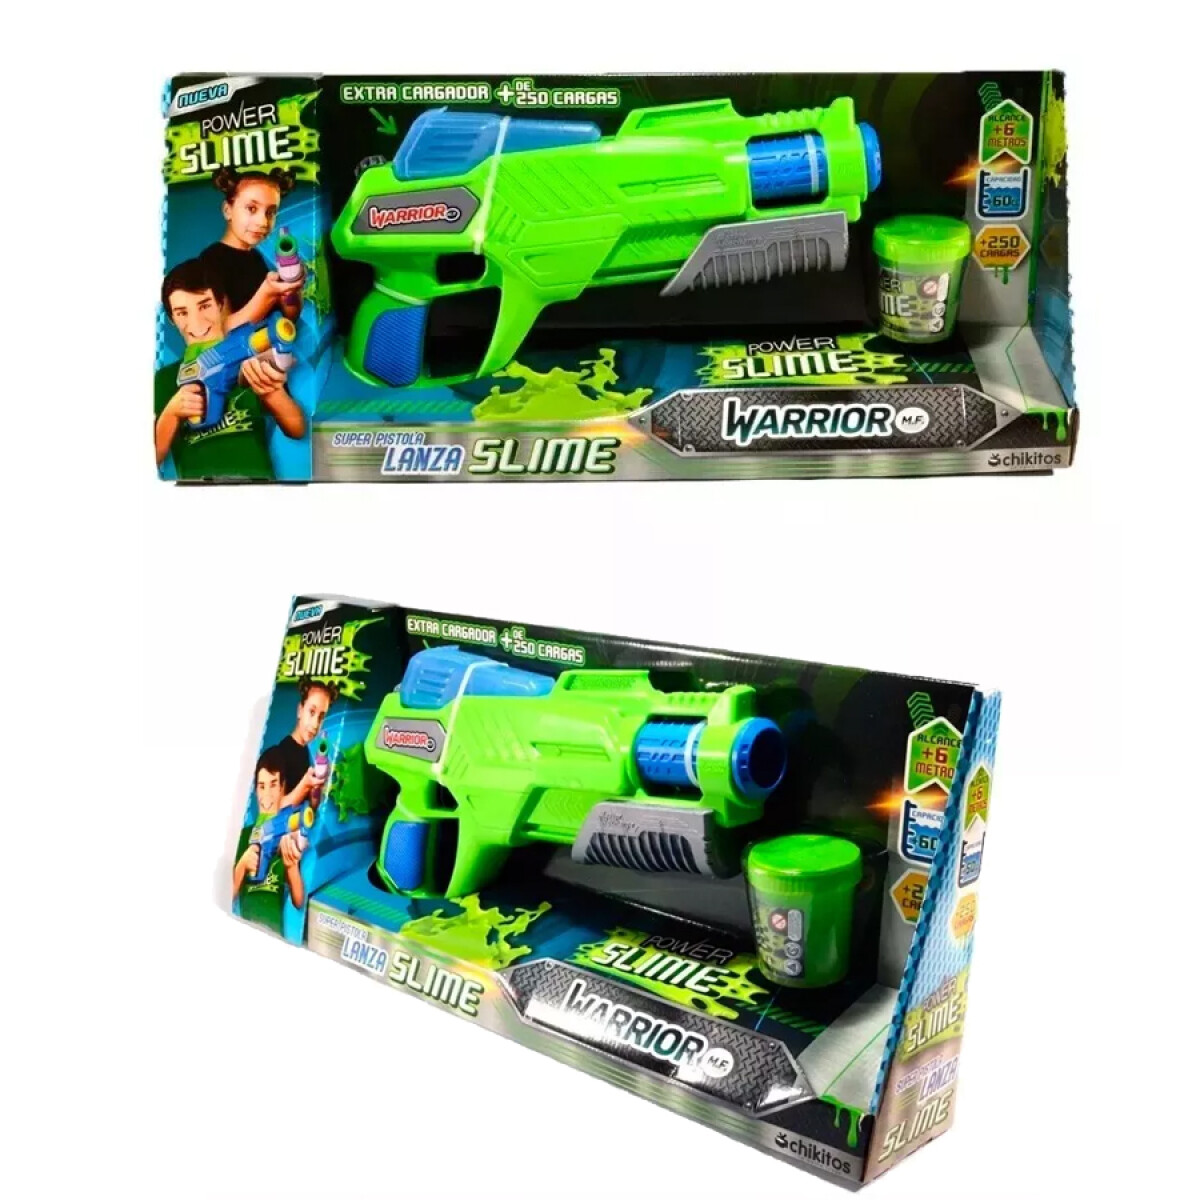 Power Slime Warriors Mf Super Pistola Lanza Slime 3230 - 001 